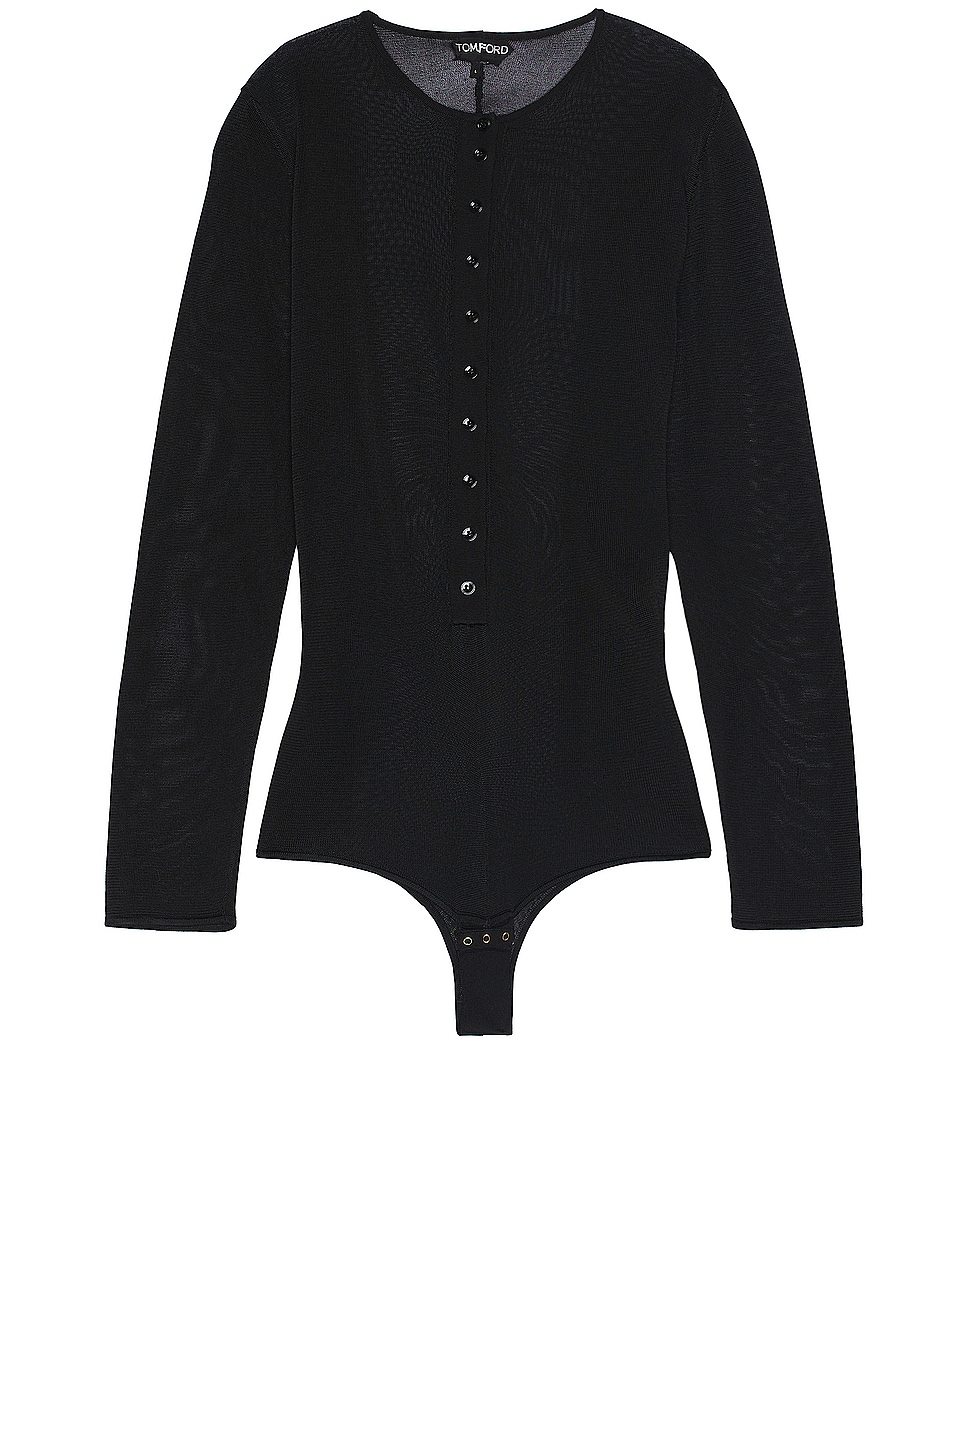 Image 1 of TOM FORD Henley Bodysuit in Black